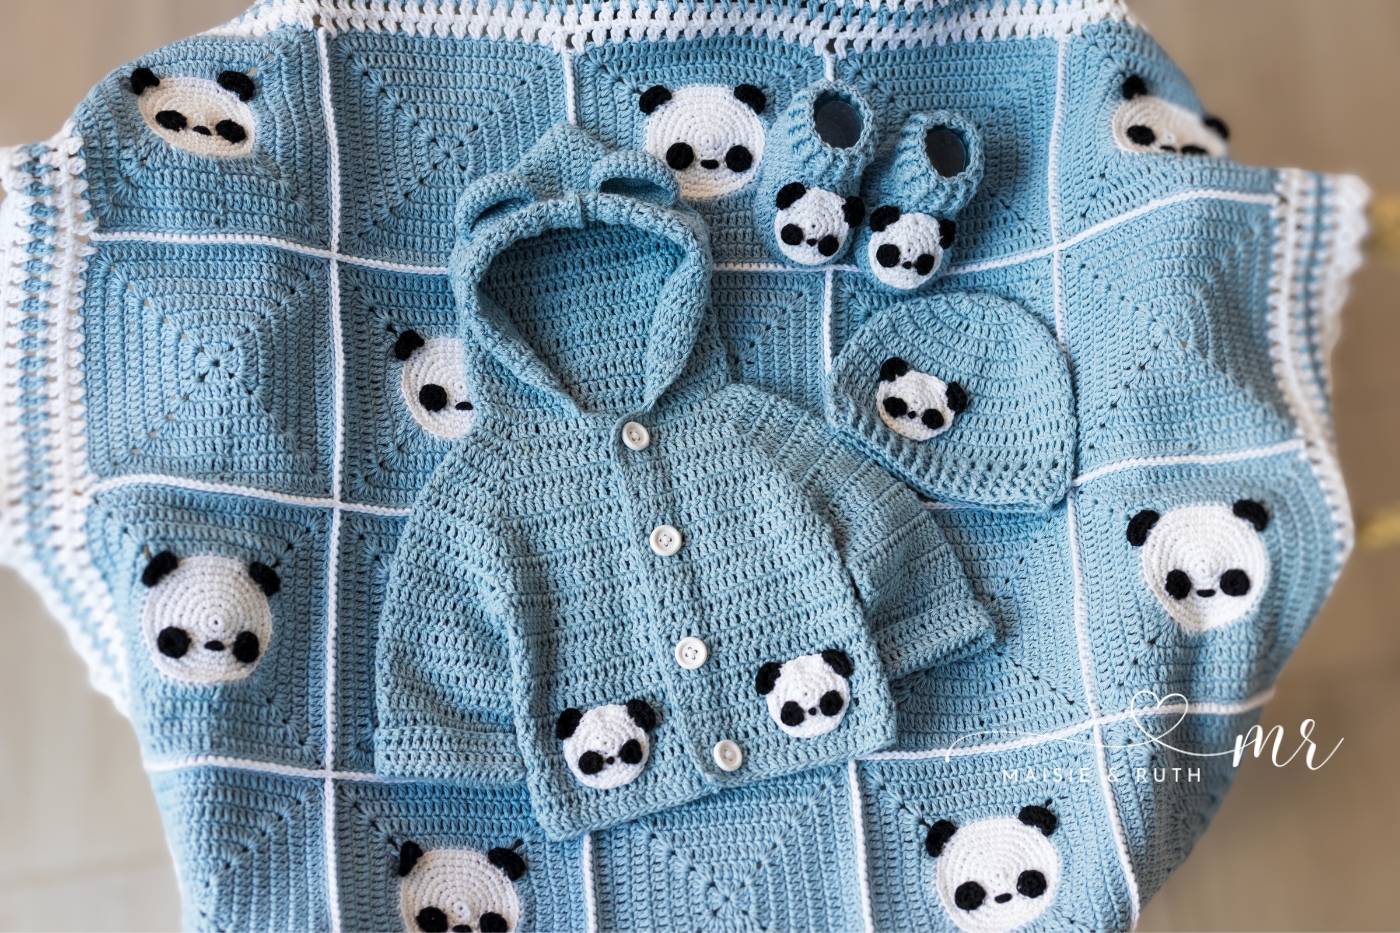 panda crochet baby blanket pattern with booties